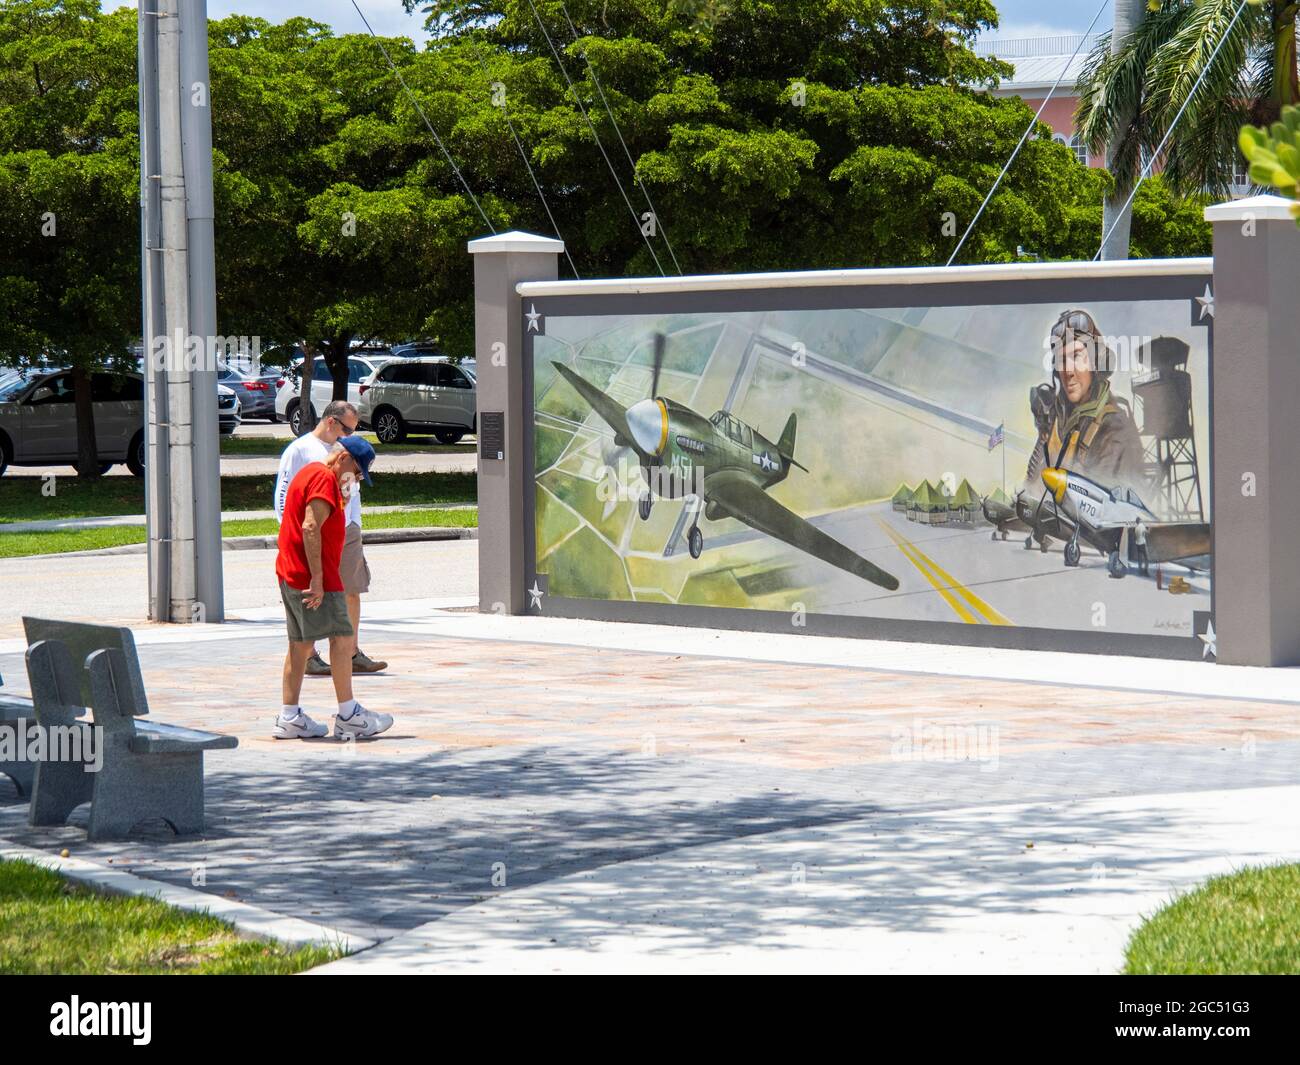 The Vietnam Veterans Memorial in Punta Gorda Florida USA Stock Photo